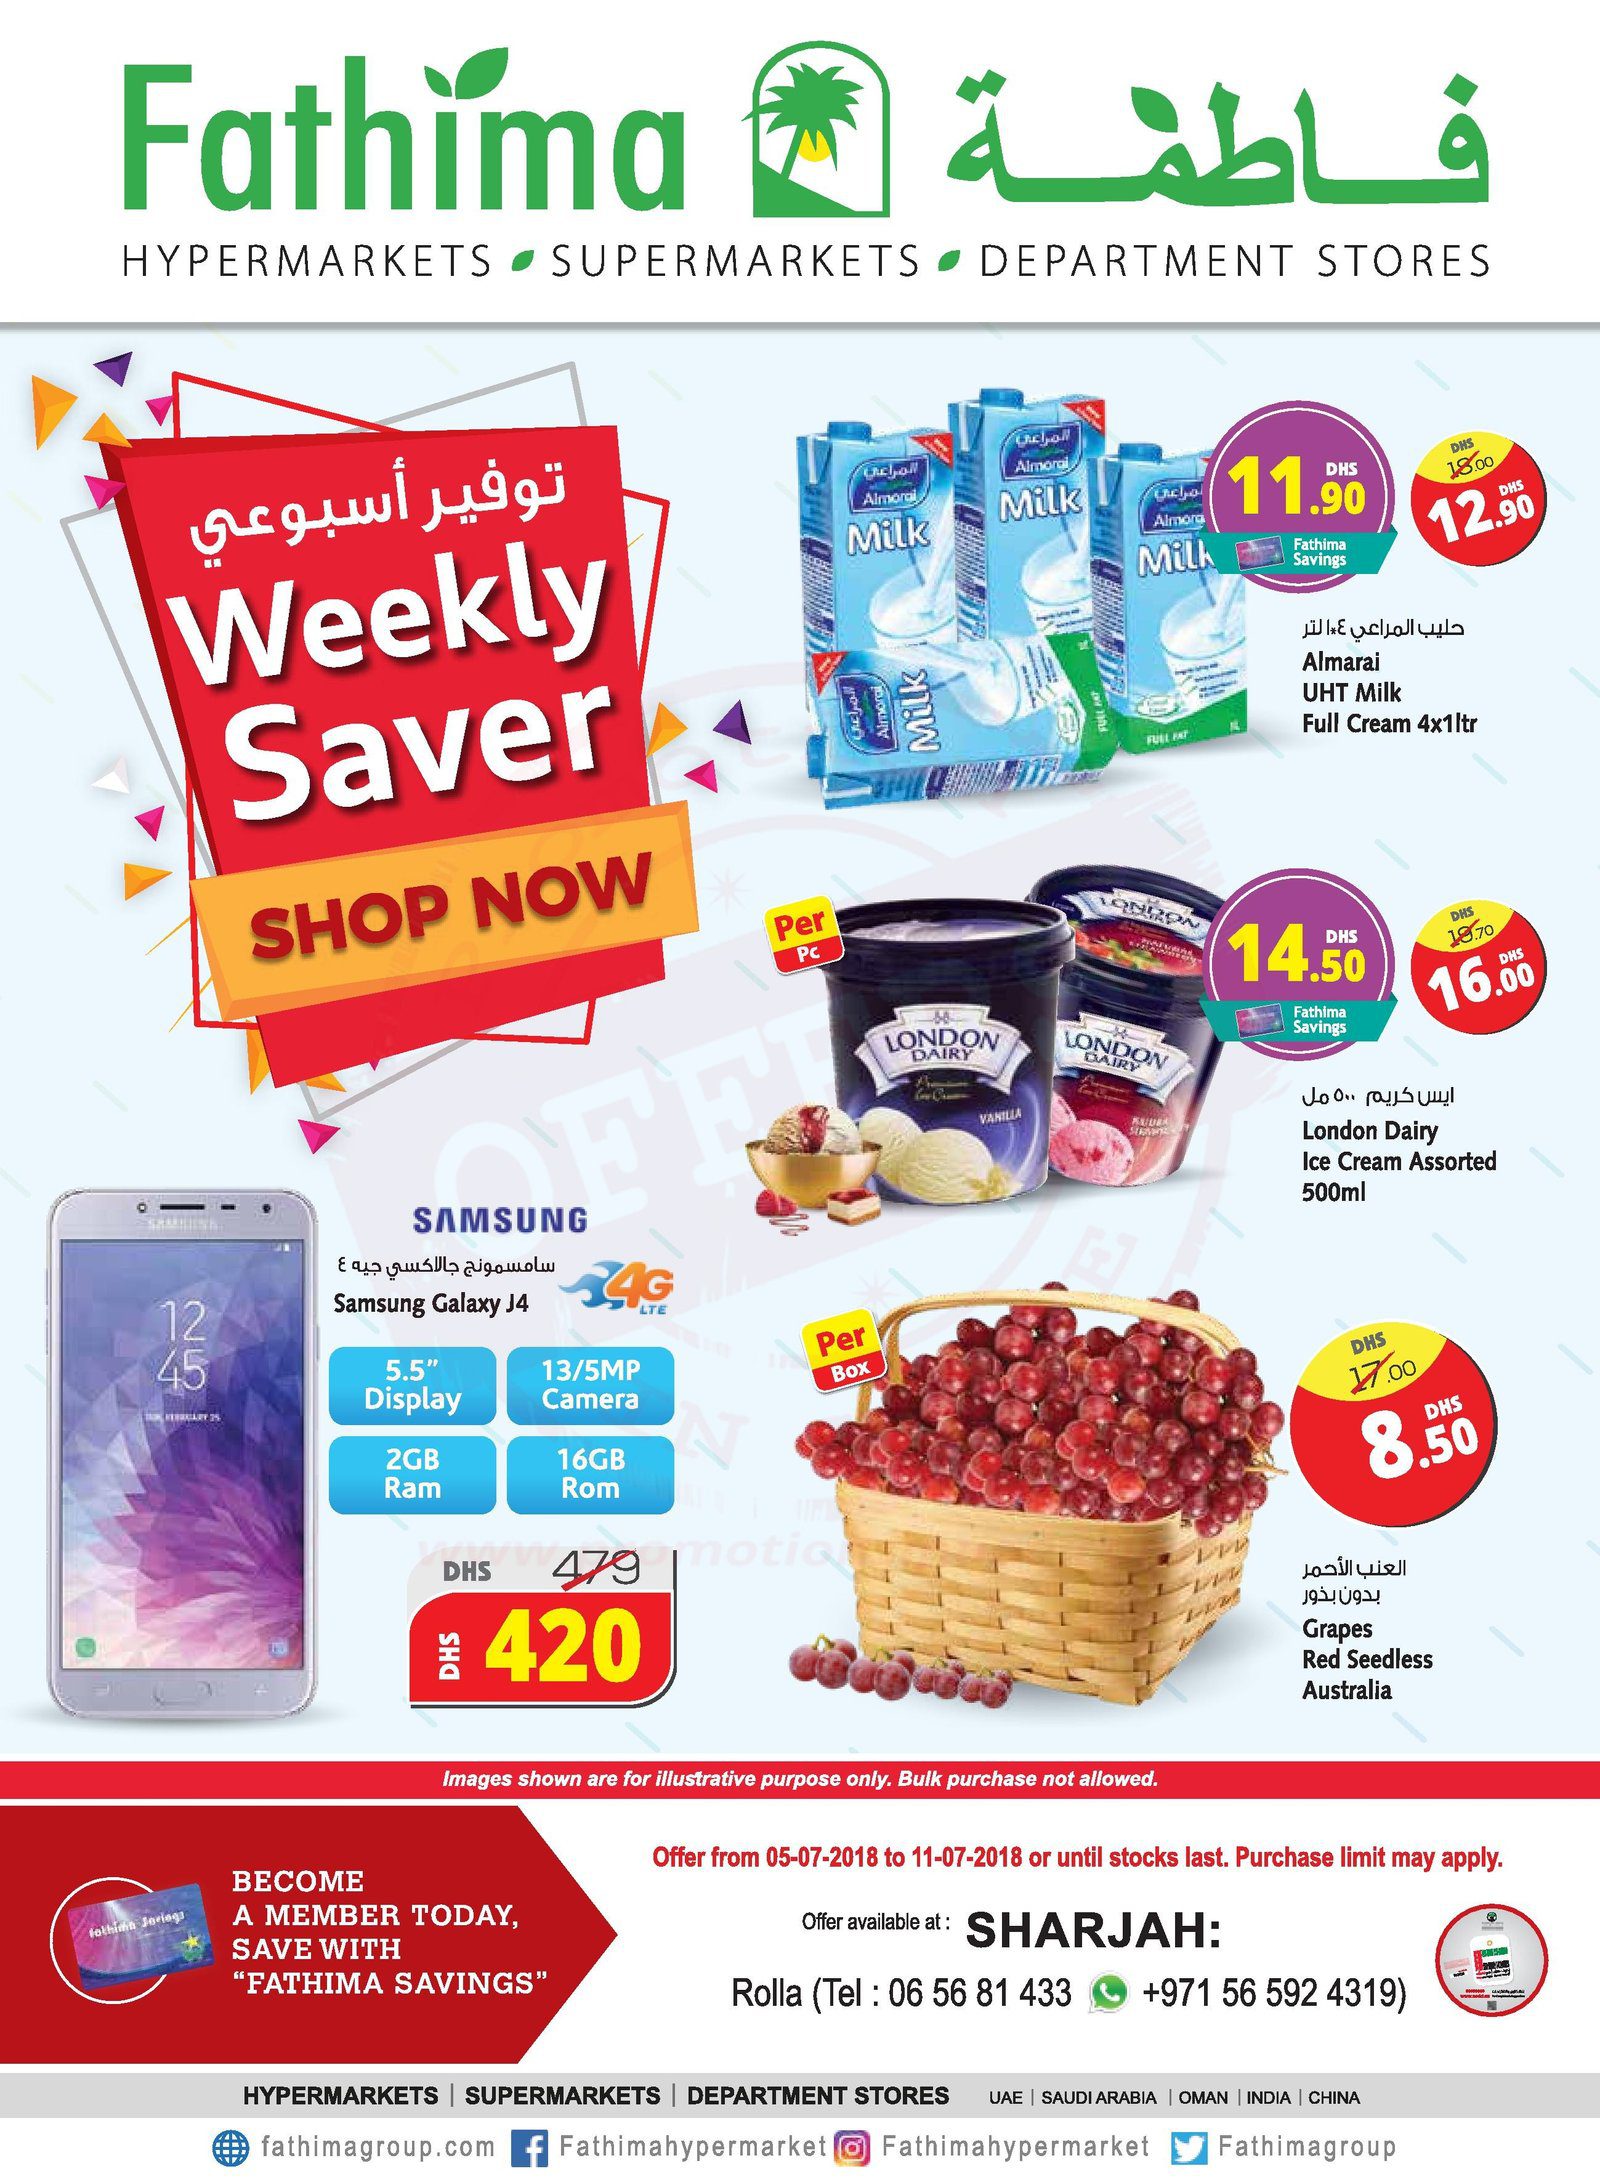 Fathima Weekly Saver Offer Sharjah